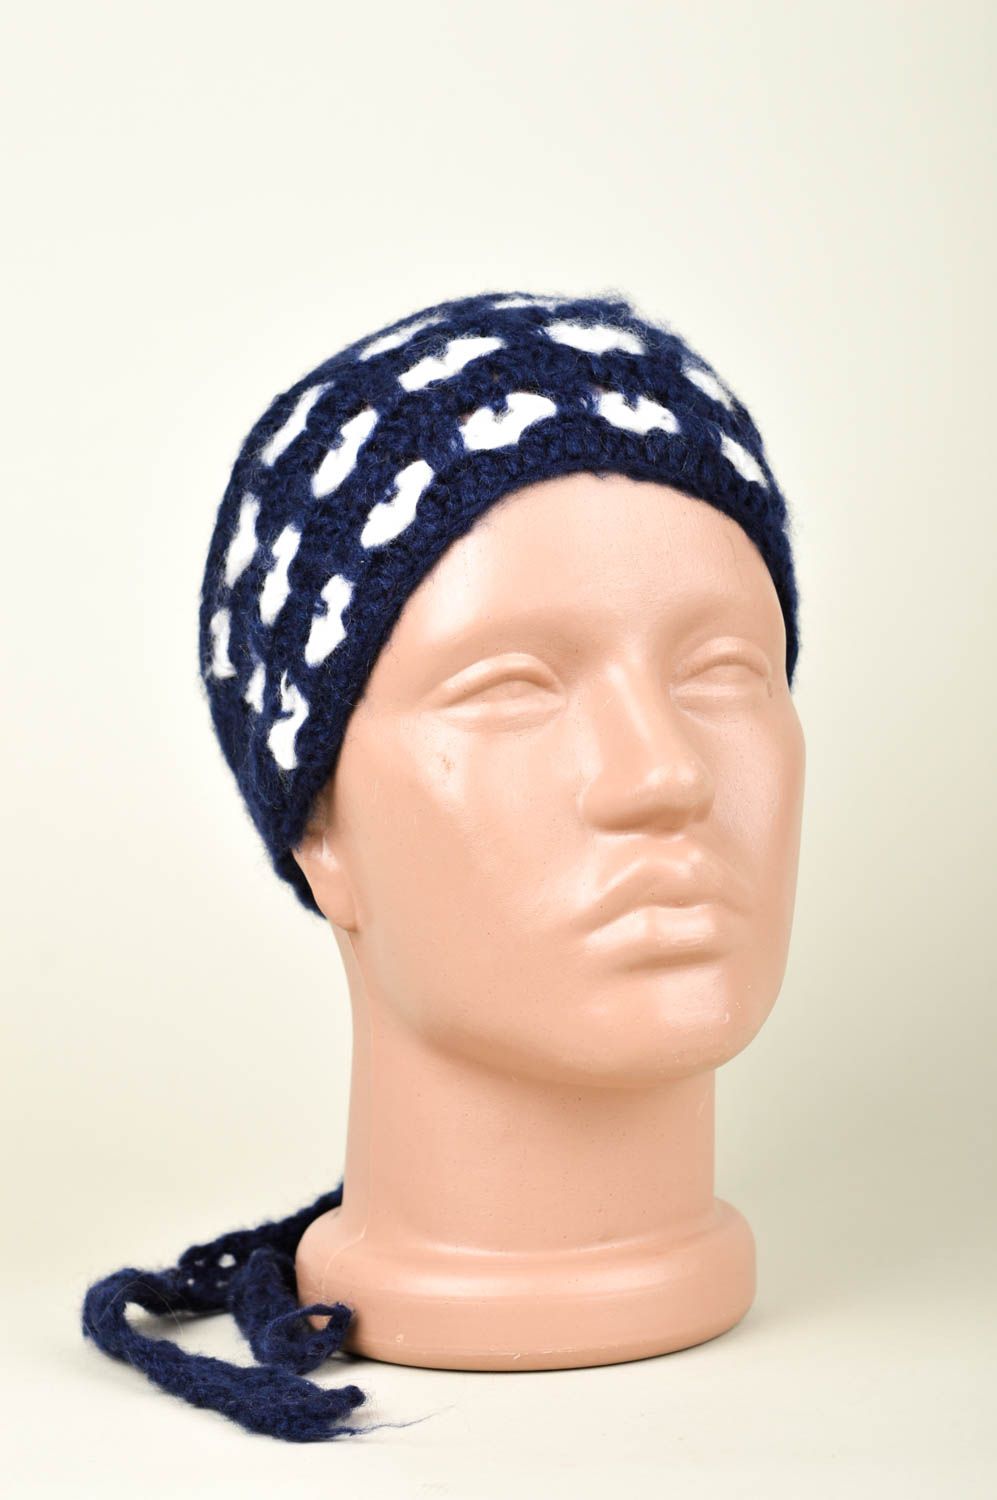 Handmade woolen headband crocheted designer headband warm winter accessory photo 1